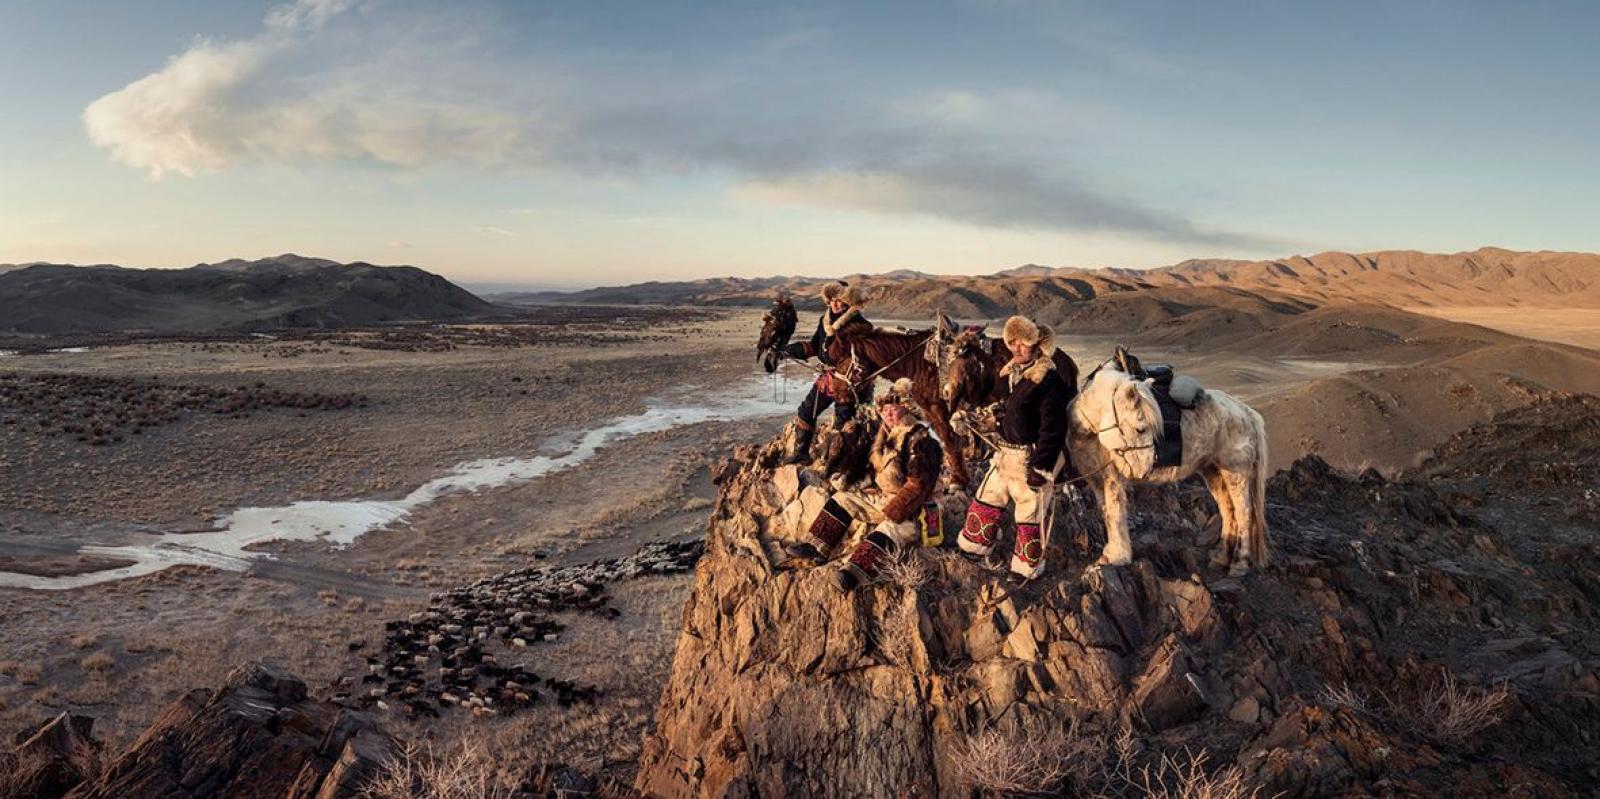 "XXX 34
Jaimurat, Jeken & Jantemer, Kazakh 
Khavtsaliin Am, Altantsogts,
Bayan-Ӧlgii province  Mongolia 

The Mongolian Kazakhs travelled through Russia to the Mongolian Altai Mountains living as semi-nomads, moving several times a year according to